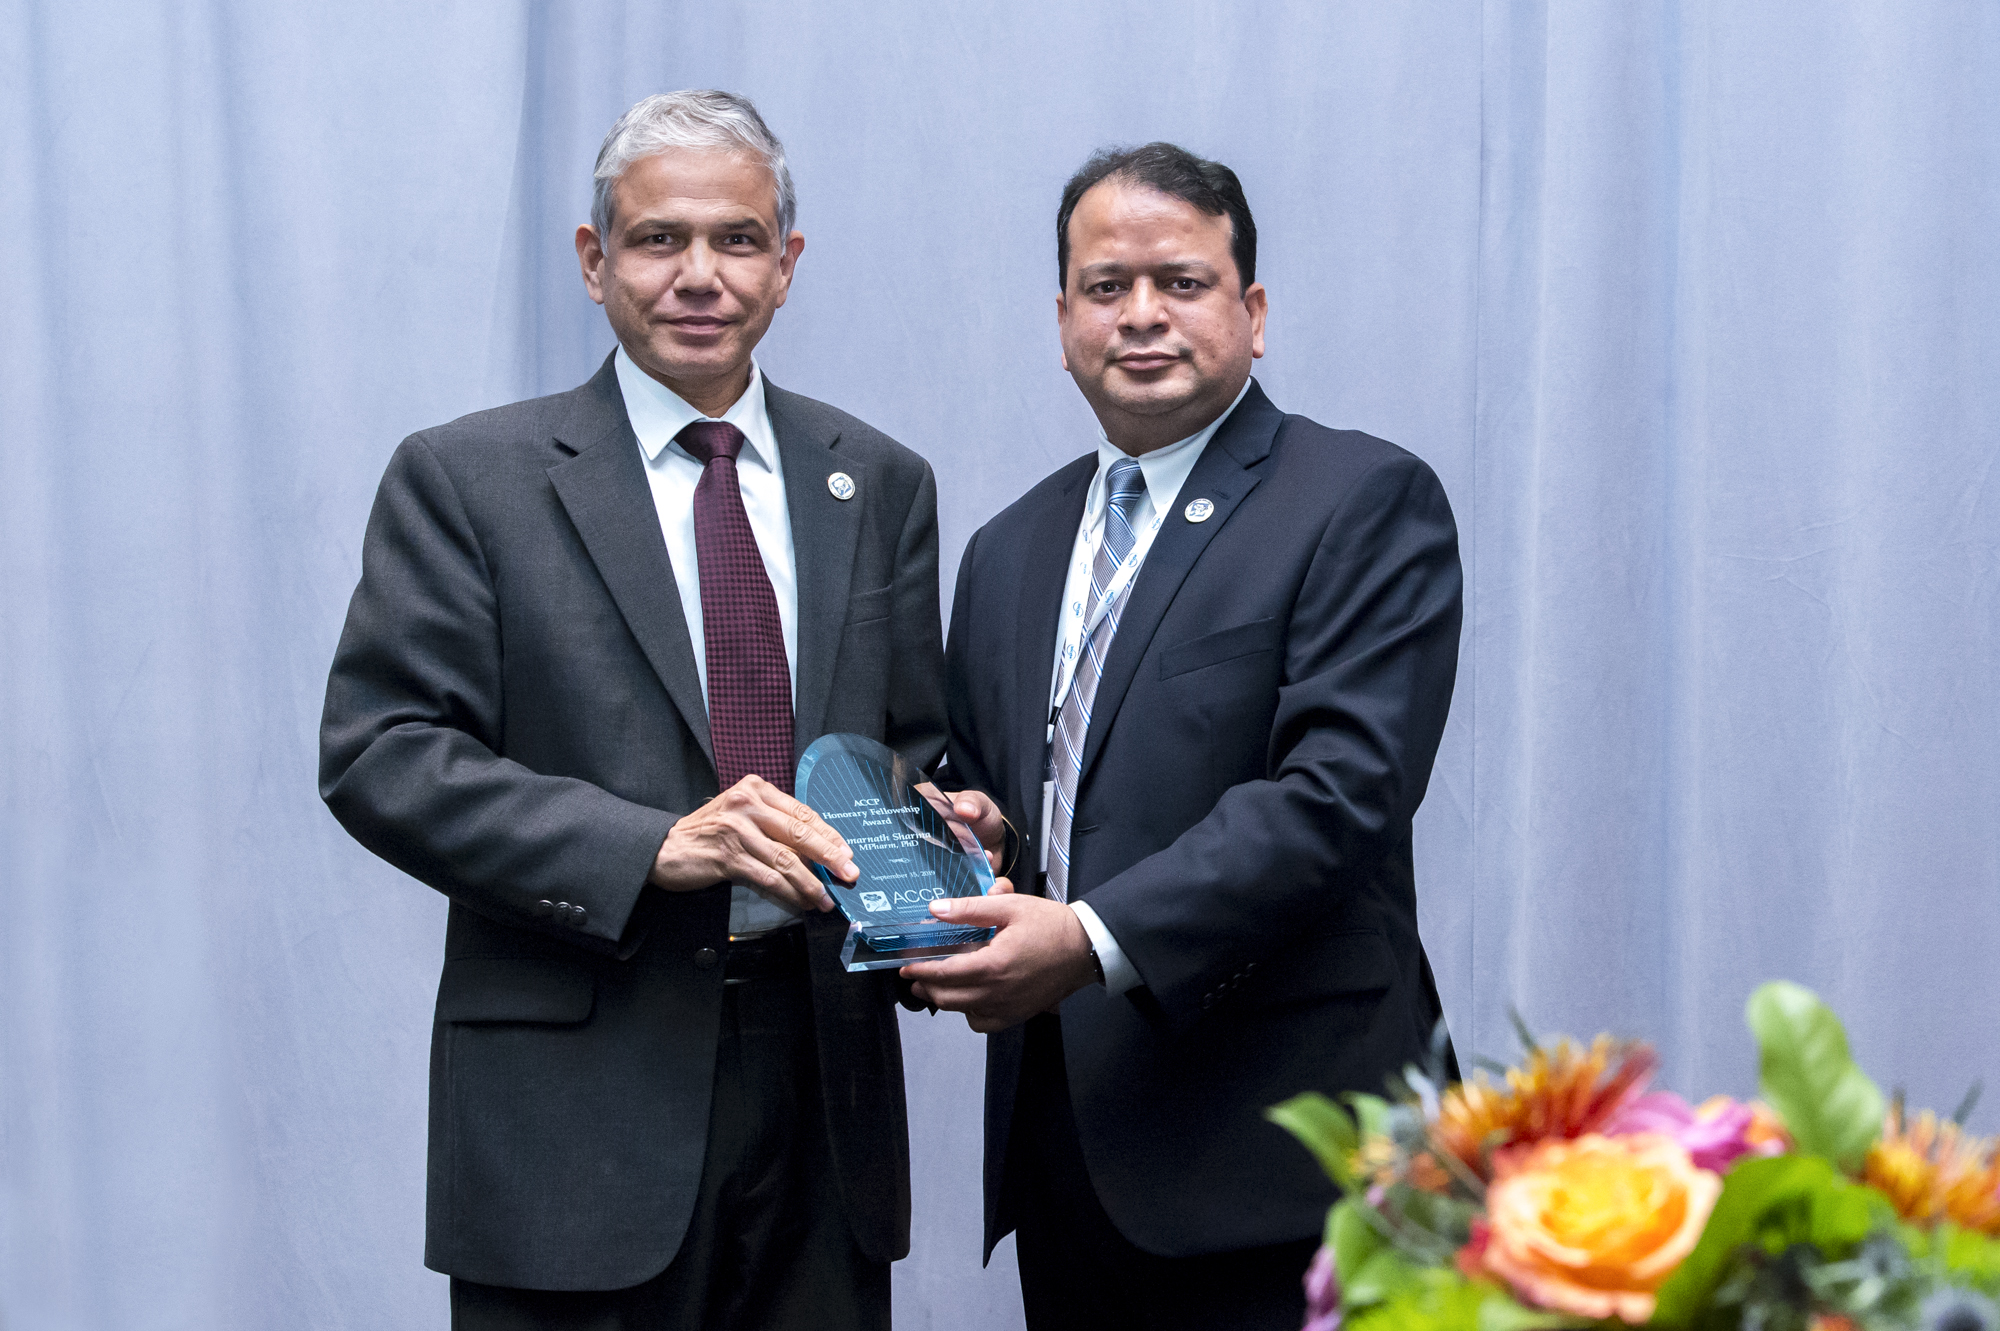 Dr. Amarnath Sharma receives the   ACCP Honorary Fellowship Award